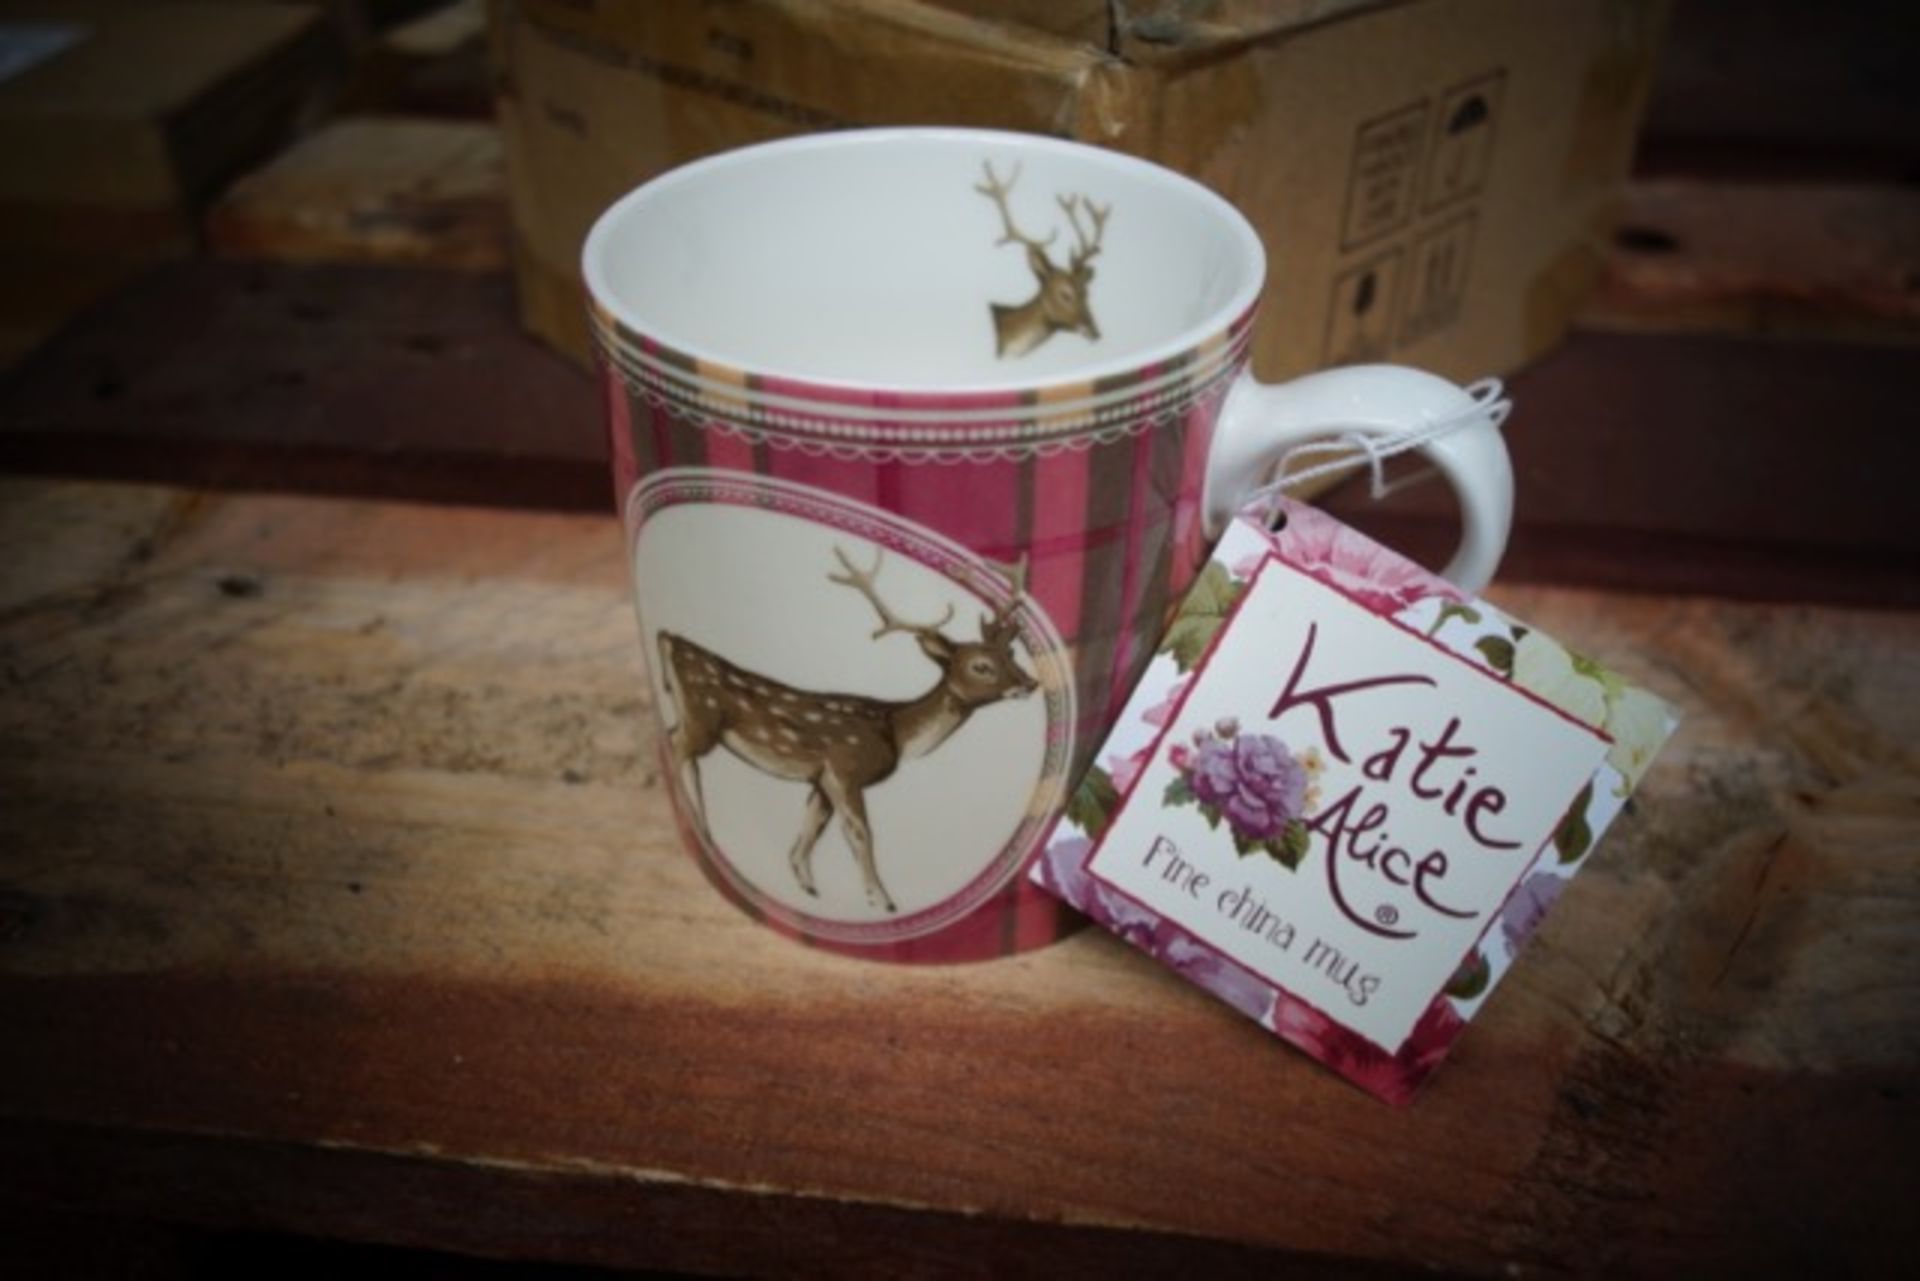 32 x Brand New Kate Alice Fine China Mugs - Highland Fling Design. RRP £9.99 each